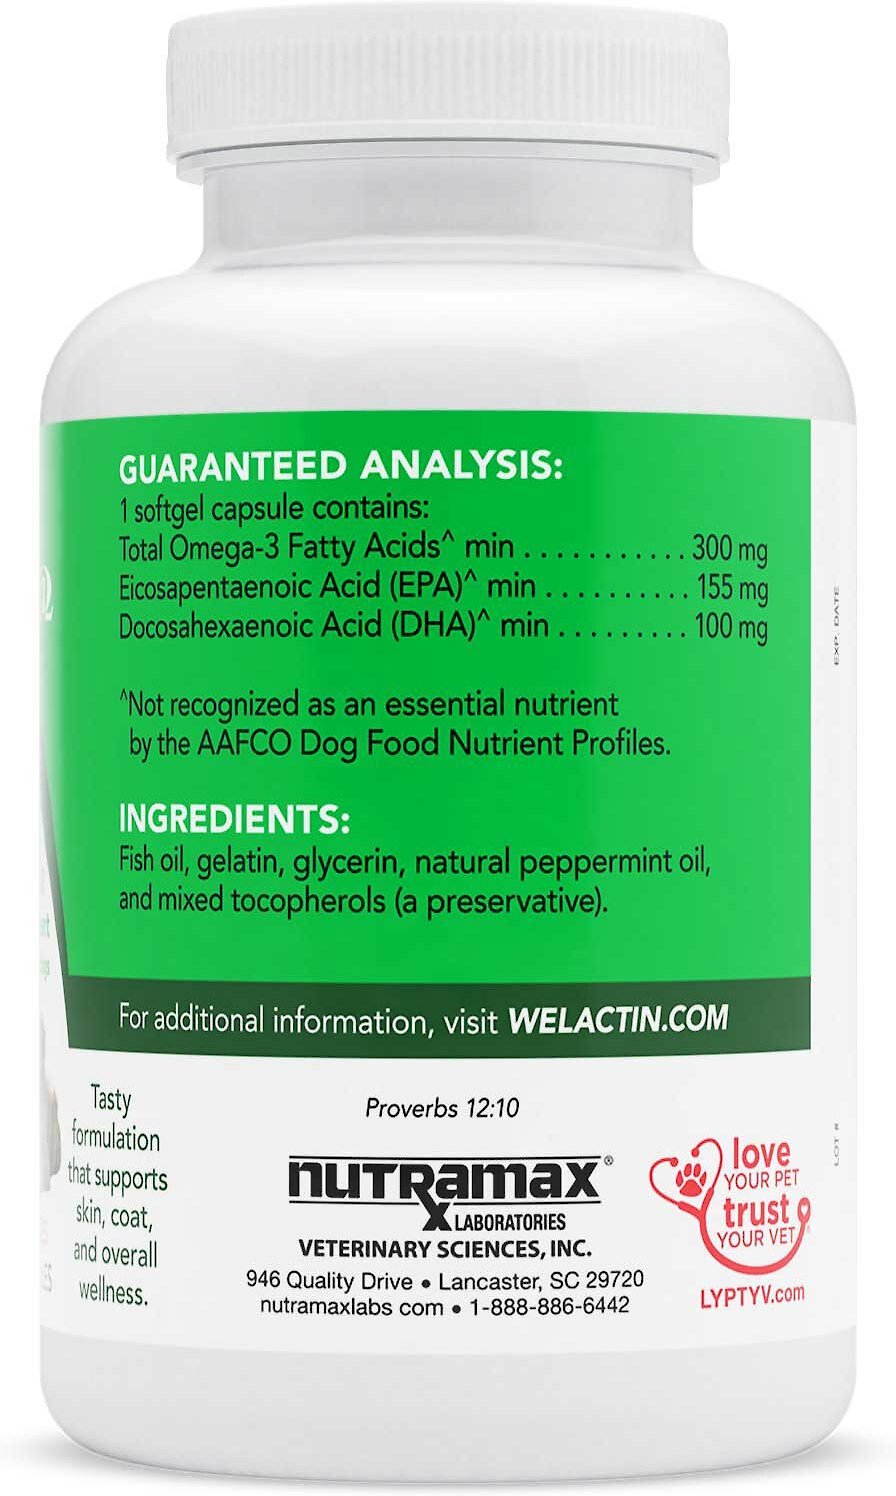 NUTRAMAX Welactin Omega3 Softgels Skin & Coat Supplement for Dogs, 240